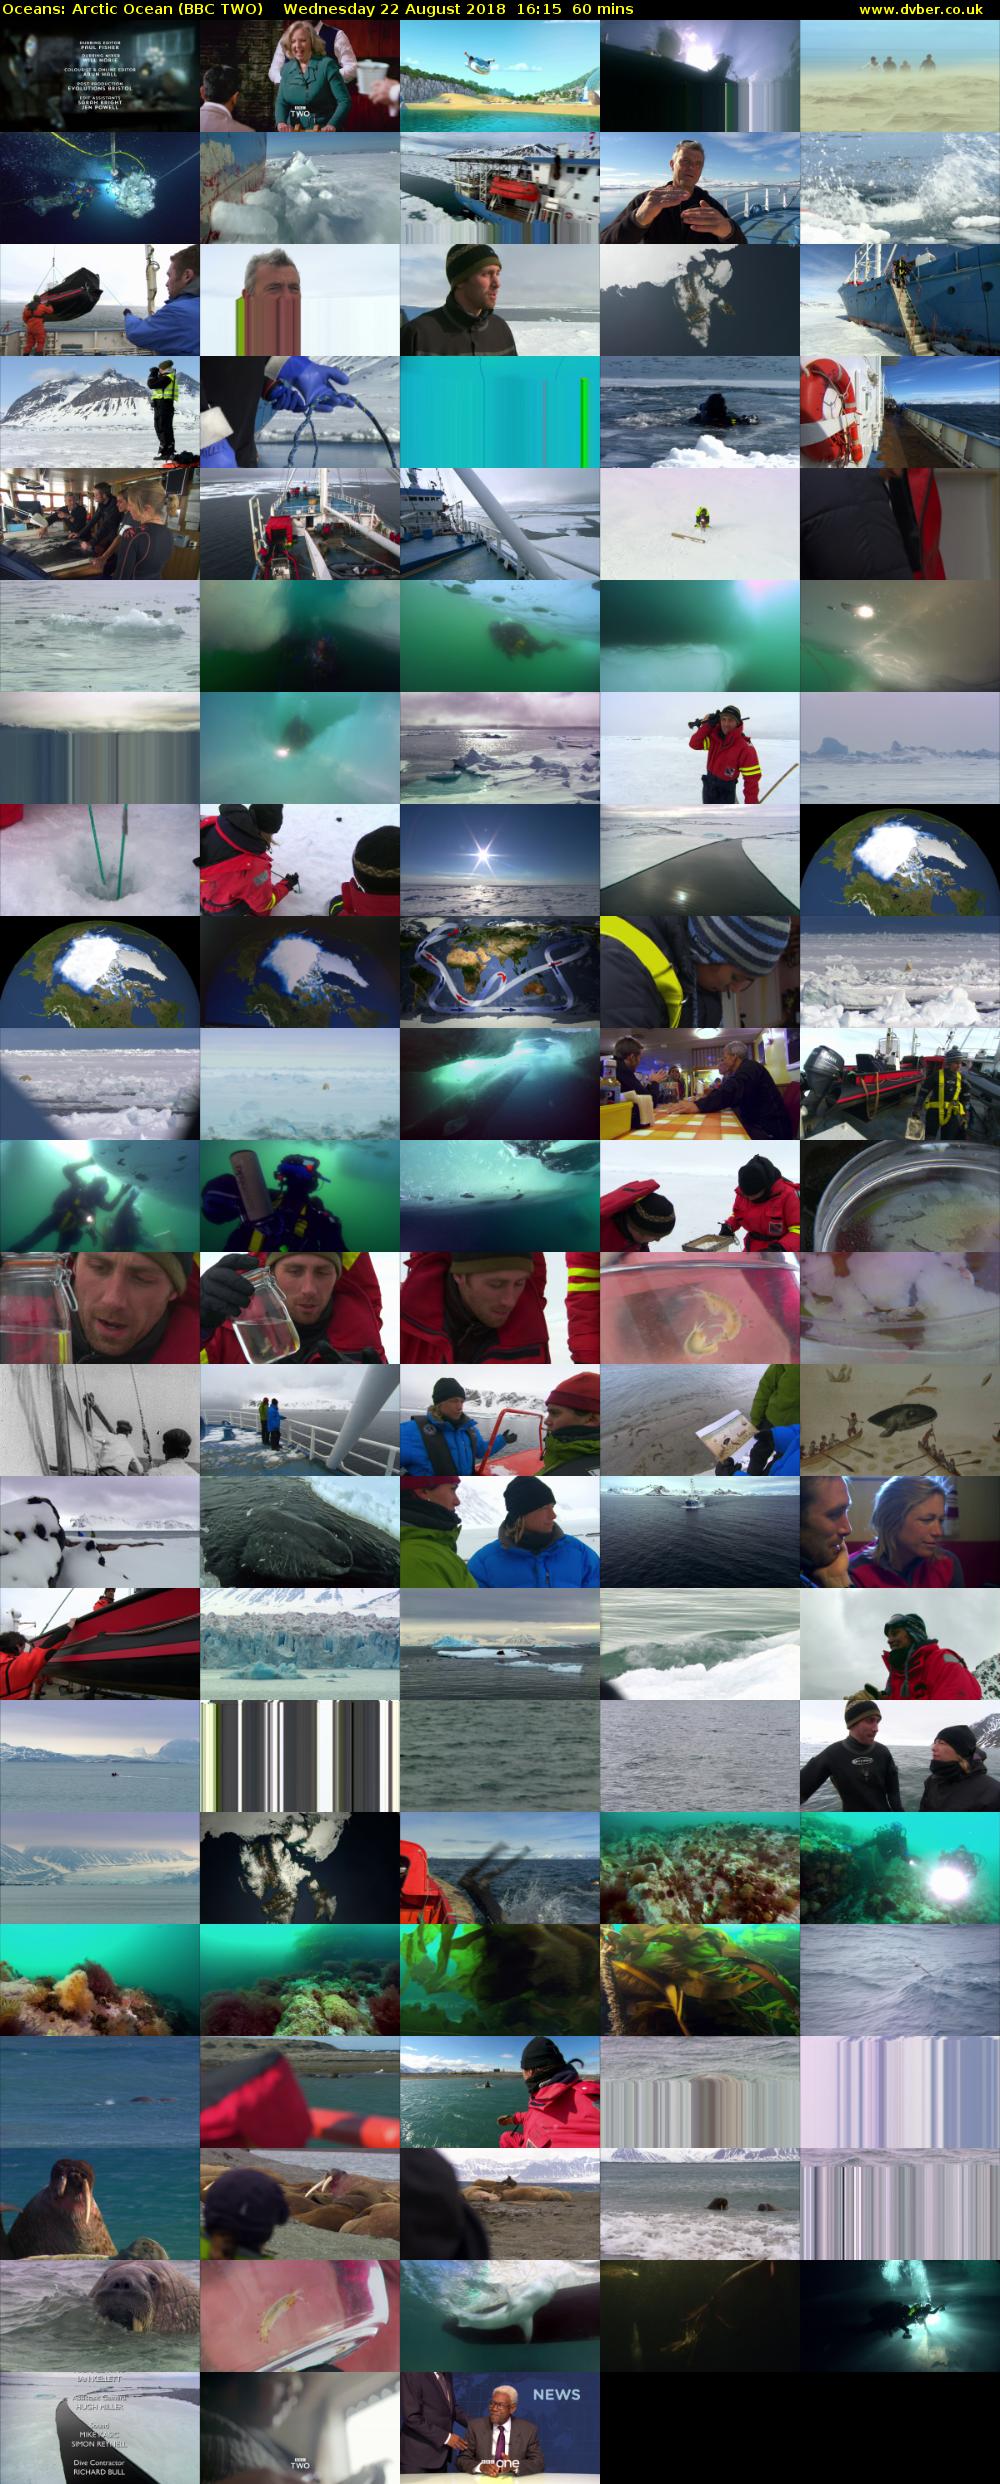 Oceans: Arctic Ocean (BBC TWO) Wednesday 22 August 2018 16:15 - 17:15